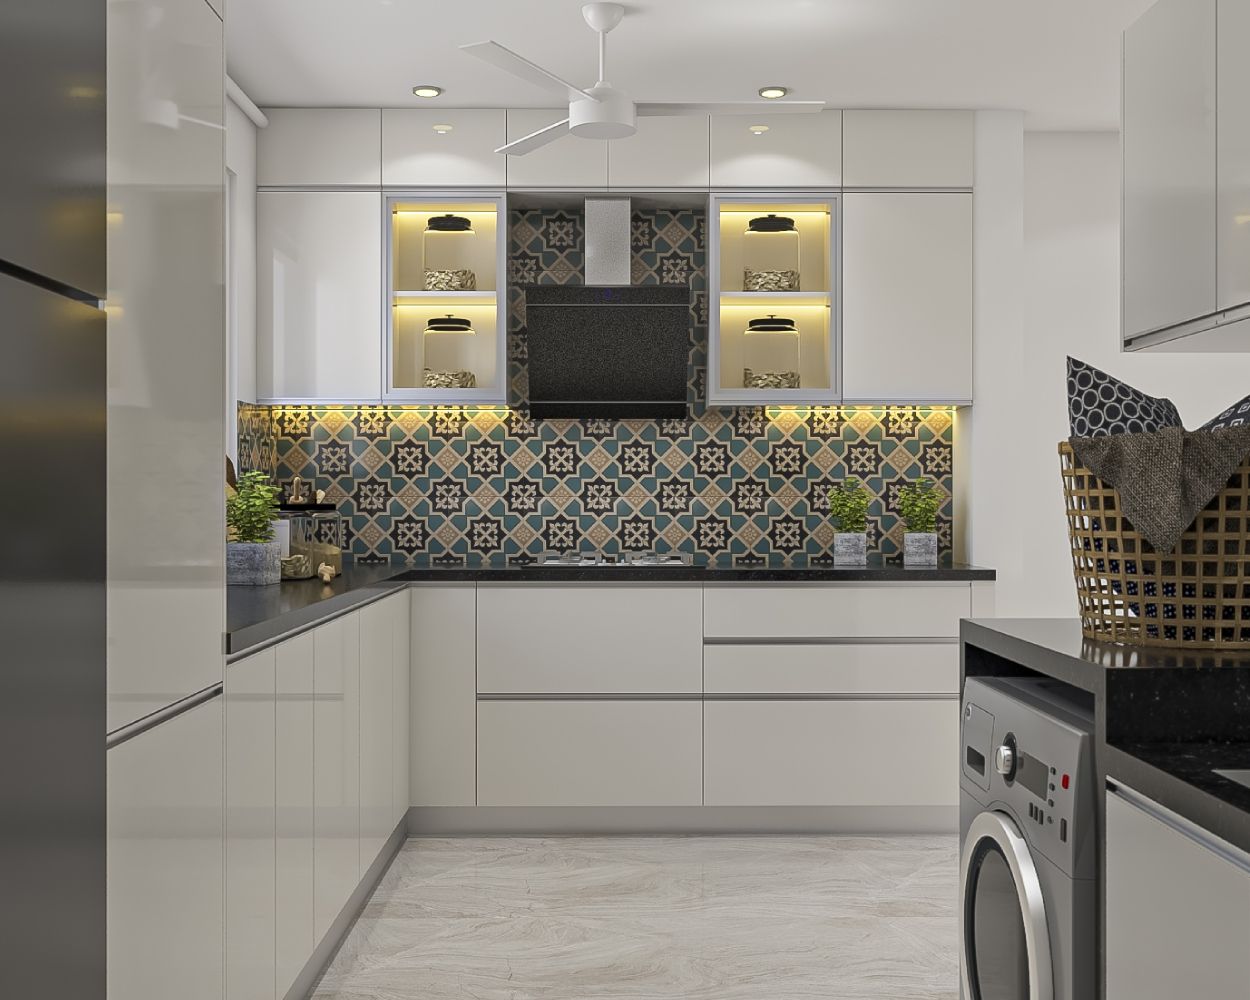 Contemporary L-Shaped Kitchen Design With A Granite Countertop